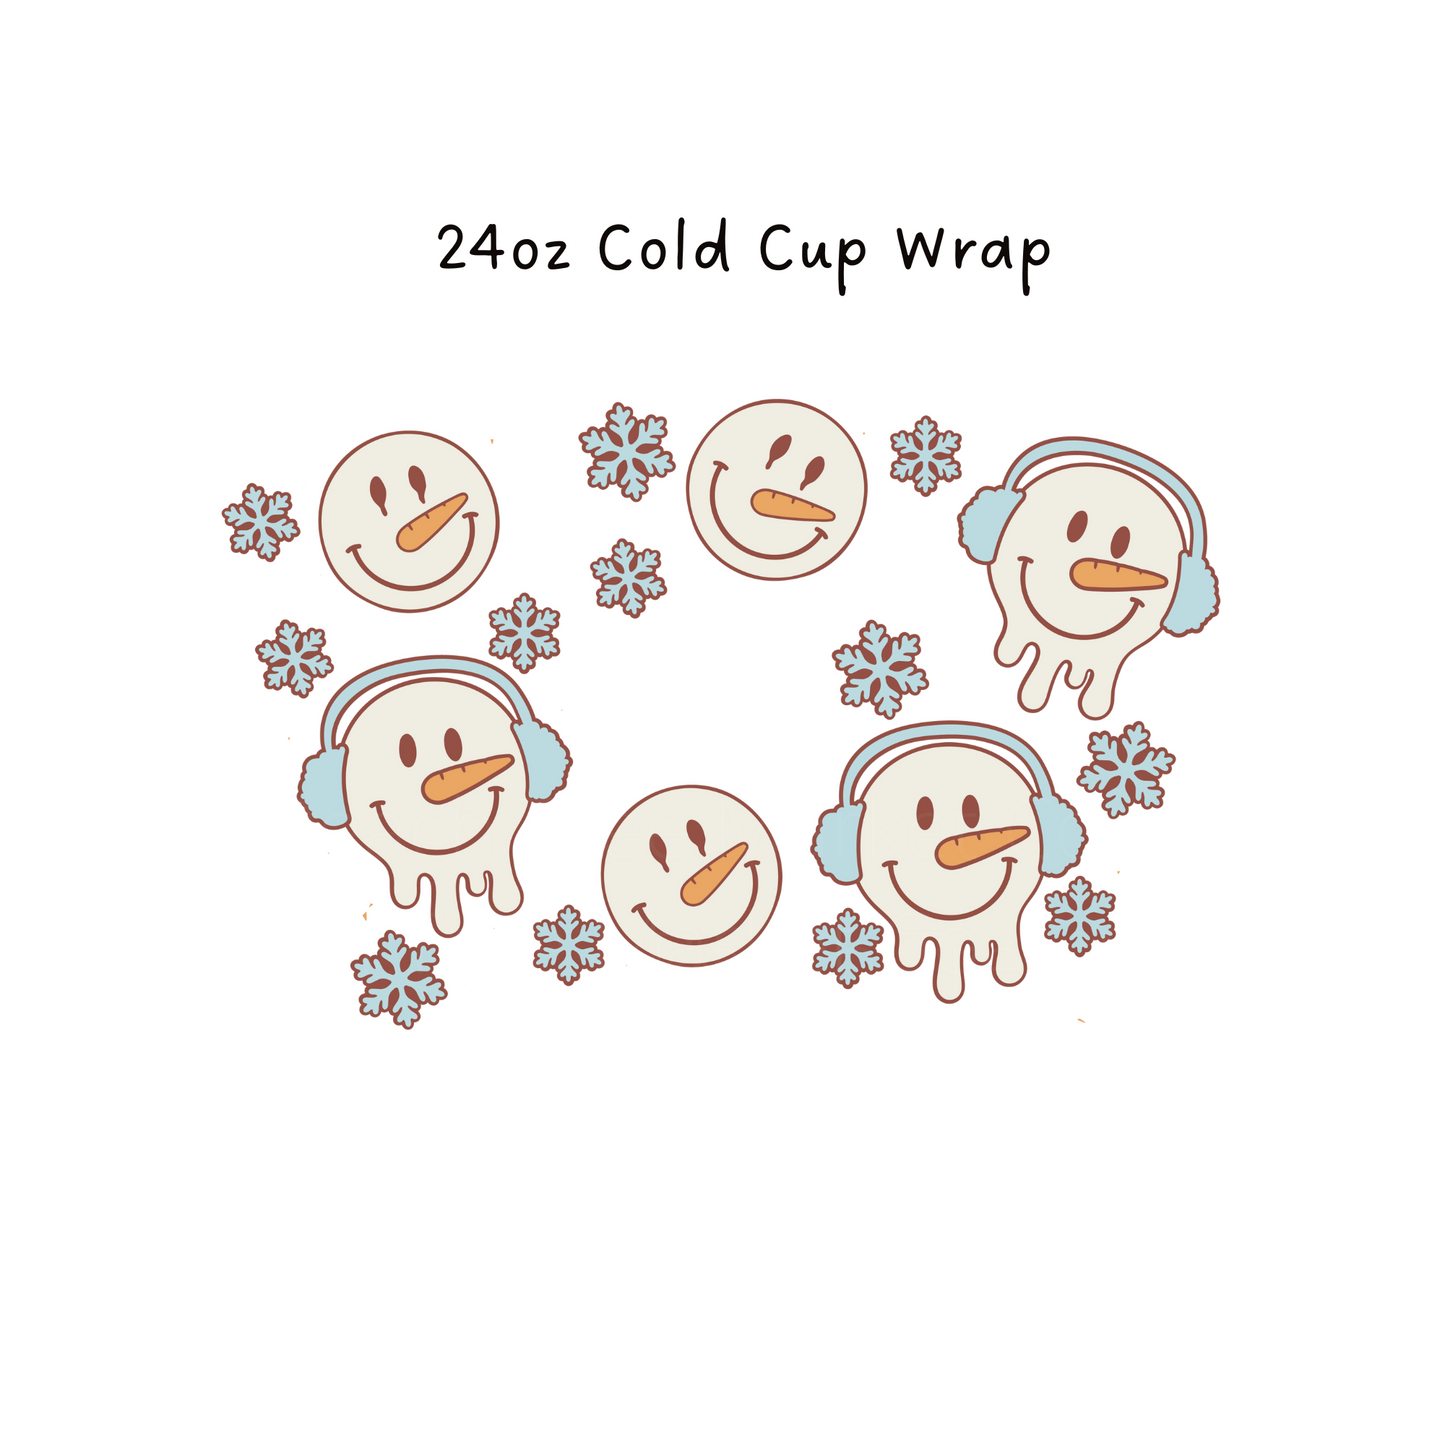 Melting Snowman  24 OZ Cold Cup Wrap